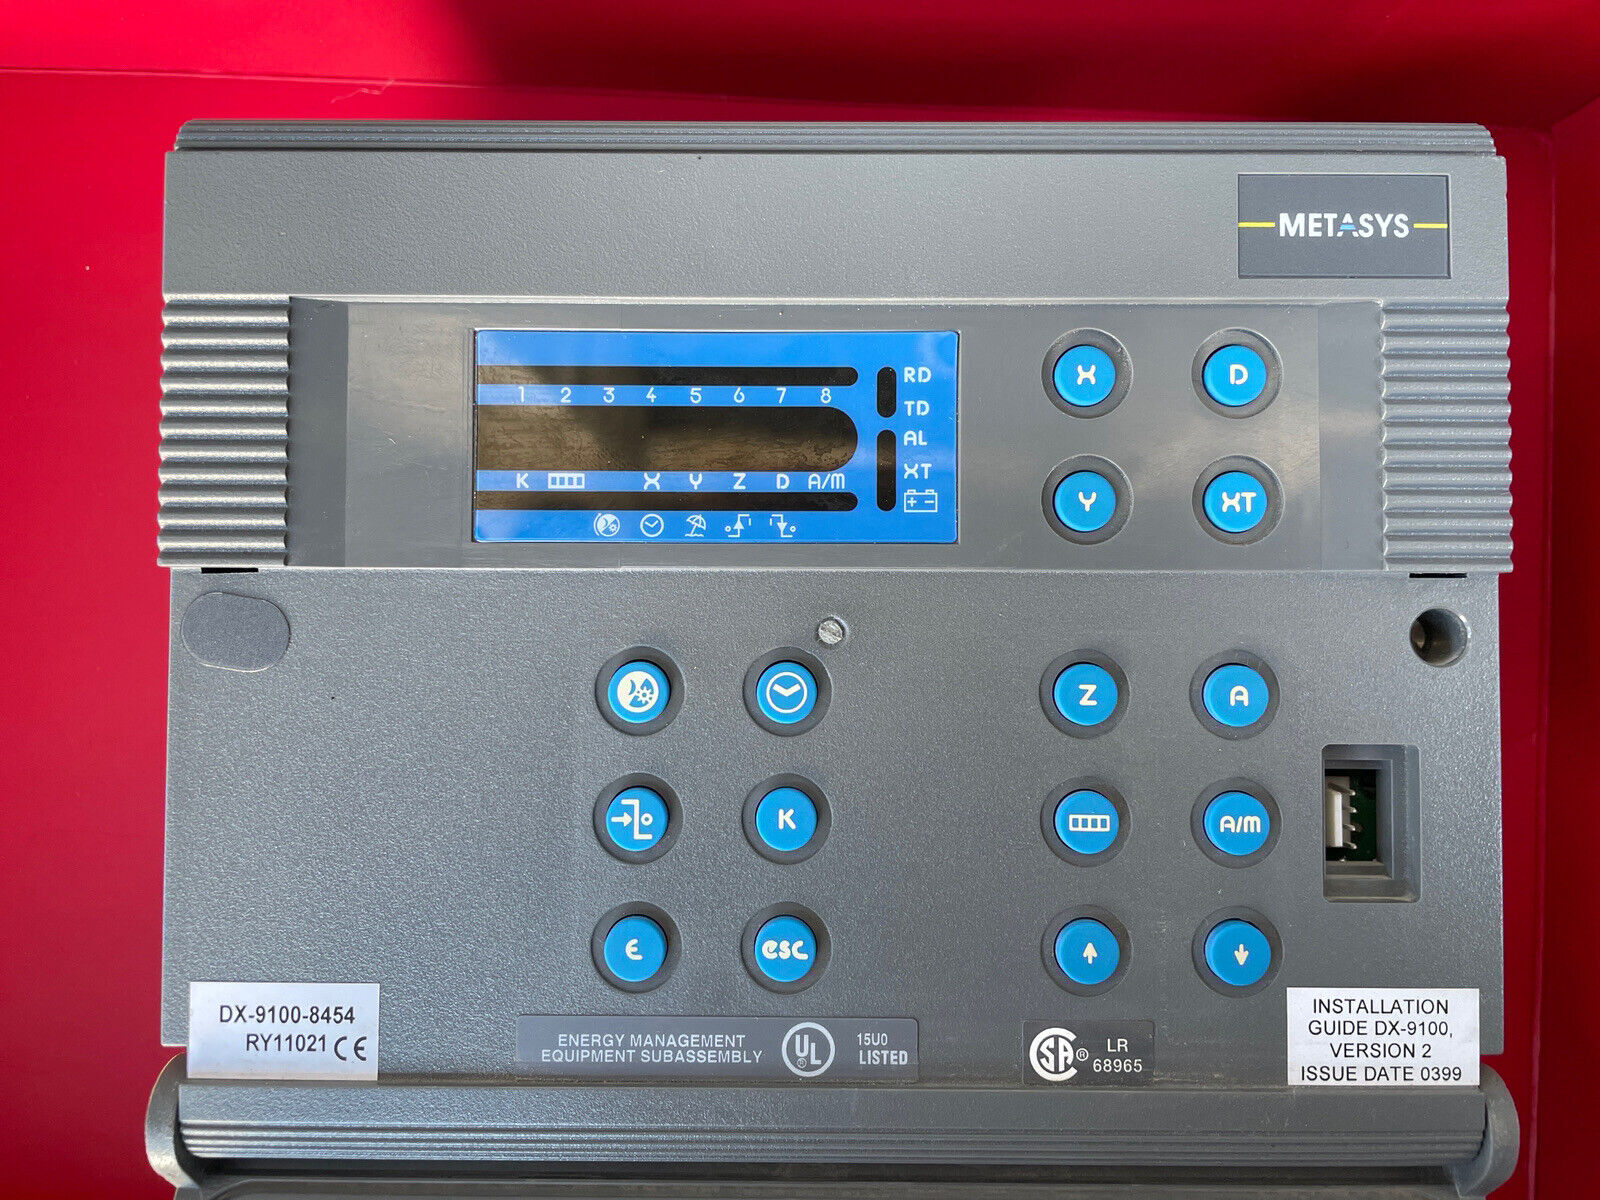 Johnson Controls DX-9100-8454 MetaSys Extended Digital Controller